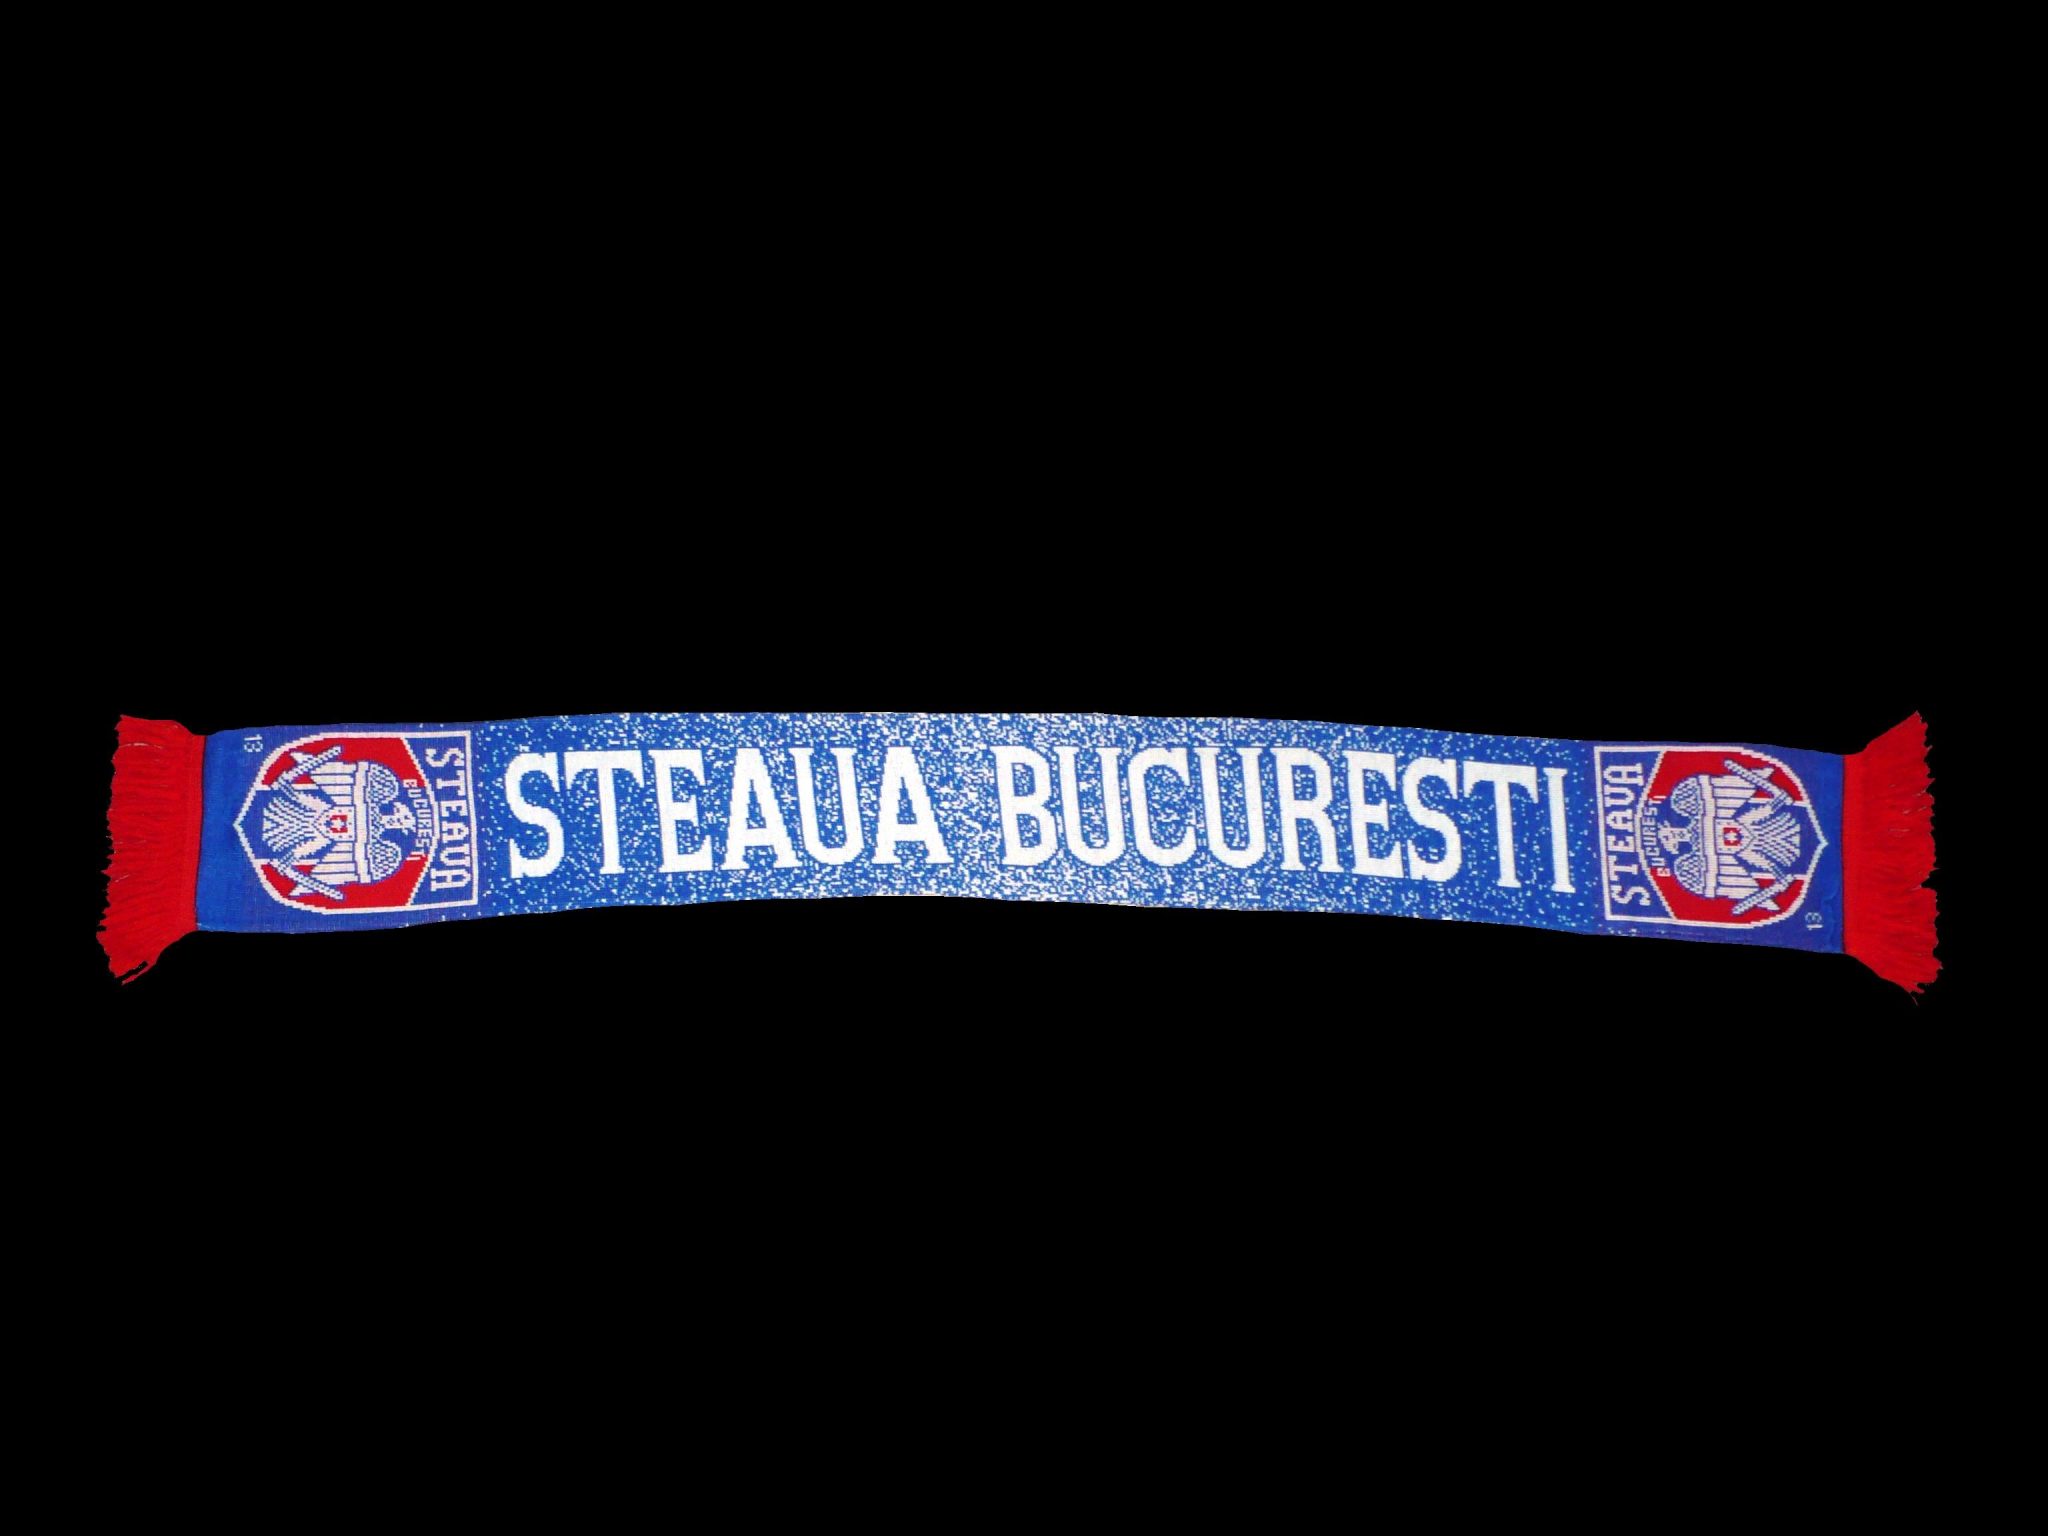 FCSB (FC Steaua Bucuresti) (@FCSteaua) / X